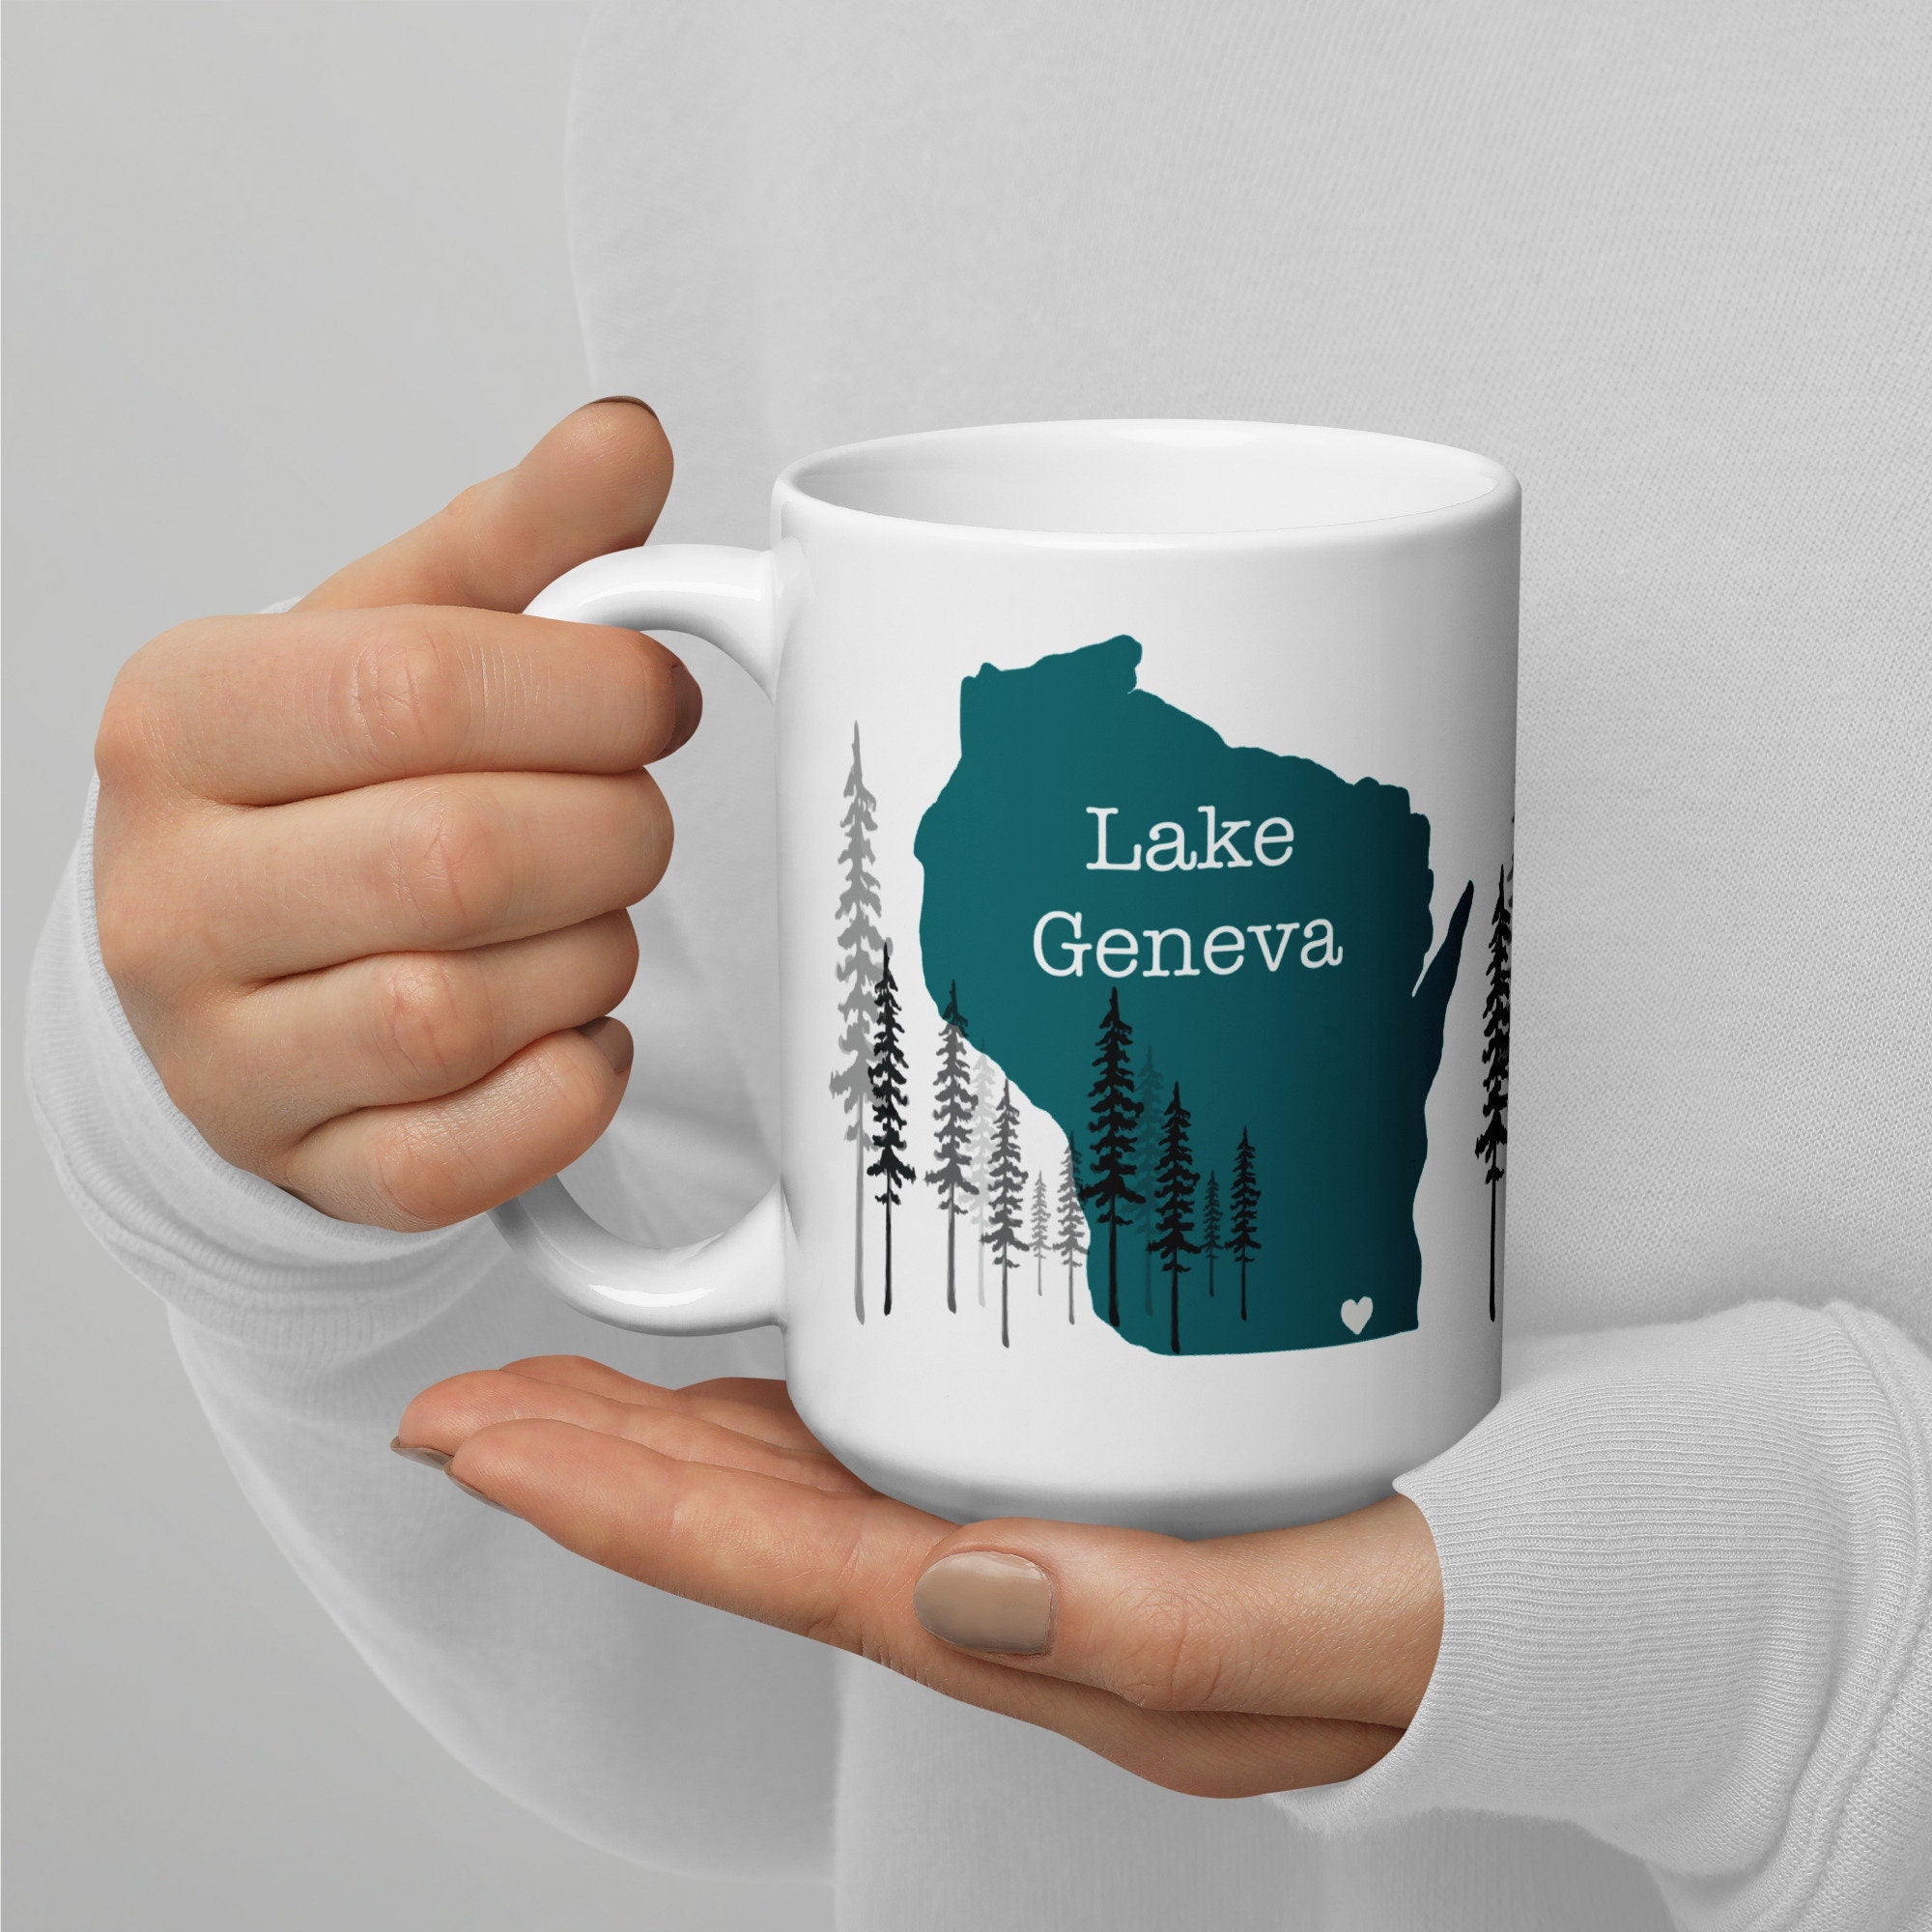 Lake Geneva Map Coffee Mug With Trees - Teal Wisconsin Cup Location You Are Here - Geneva Lake Area Housewarming gift Idea custom city